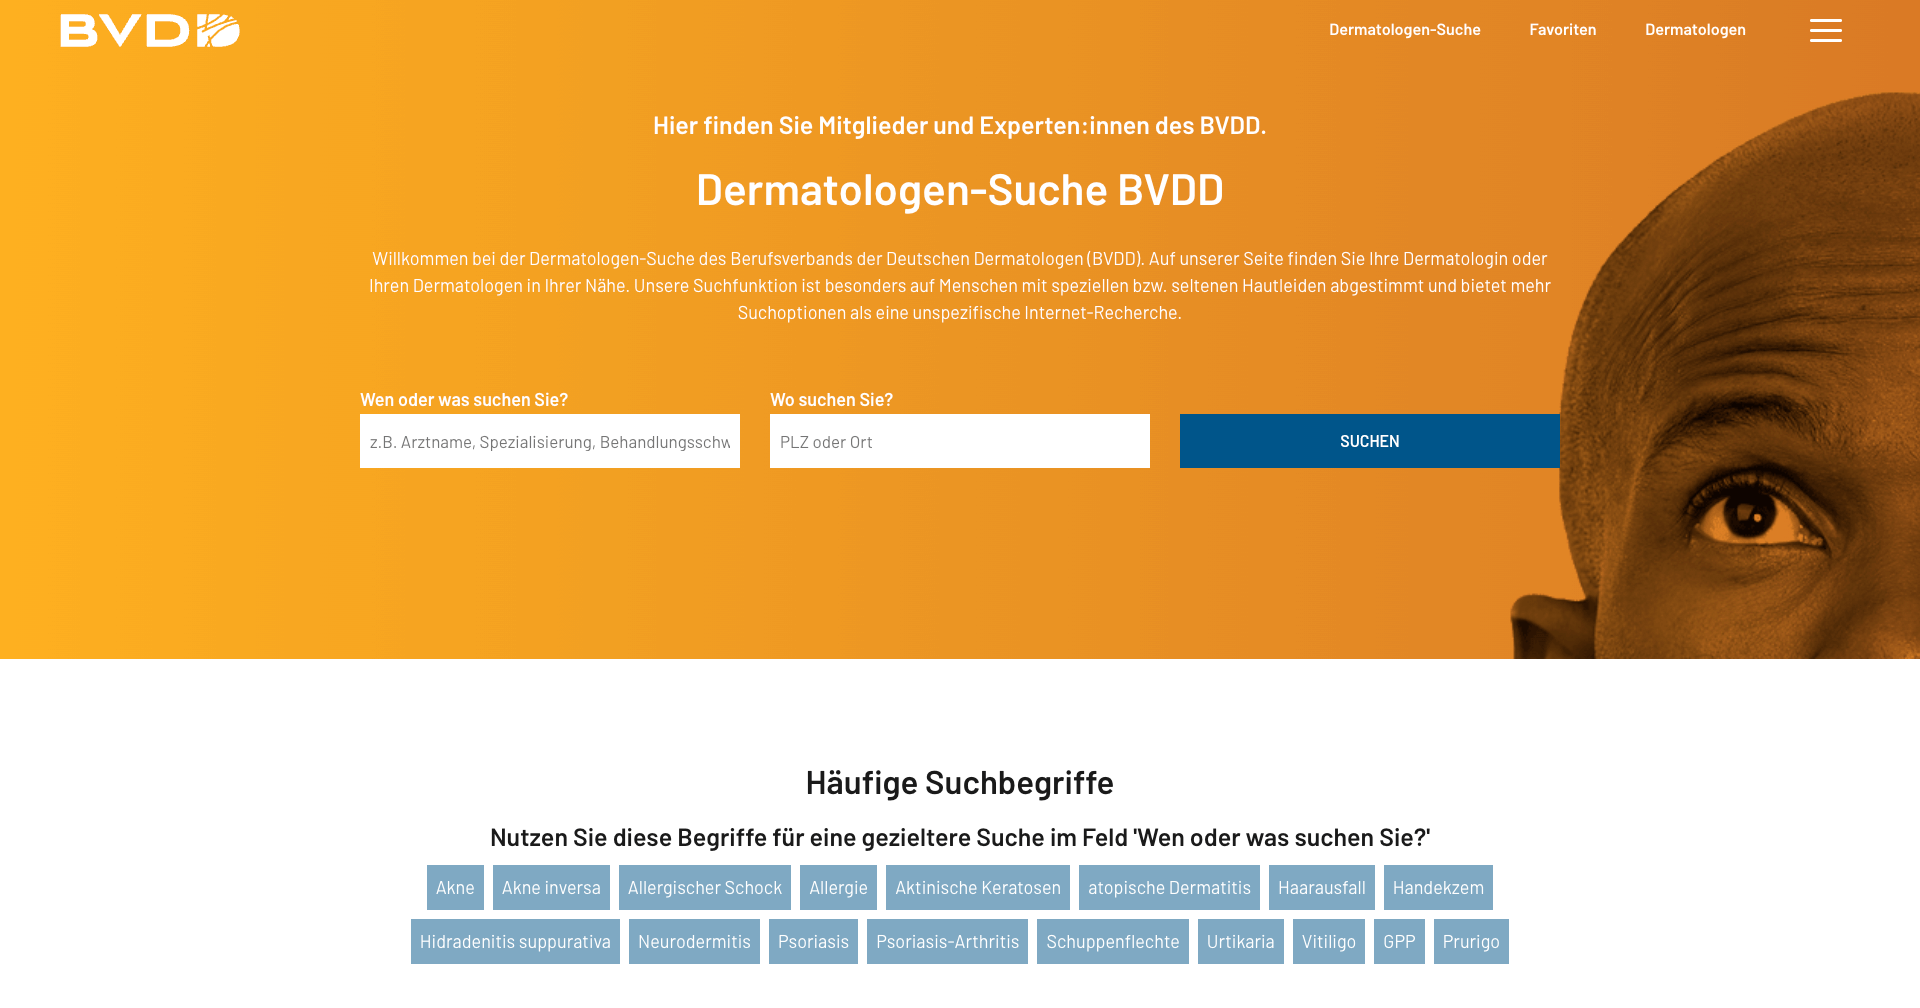 (c) Dermatologen-suche.de